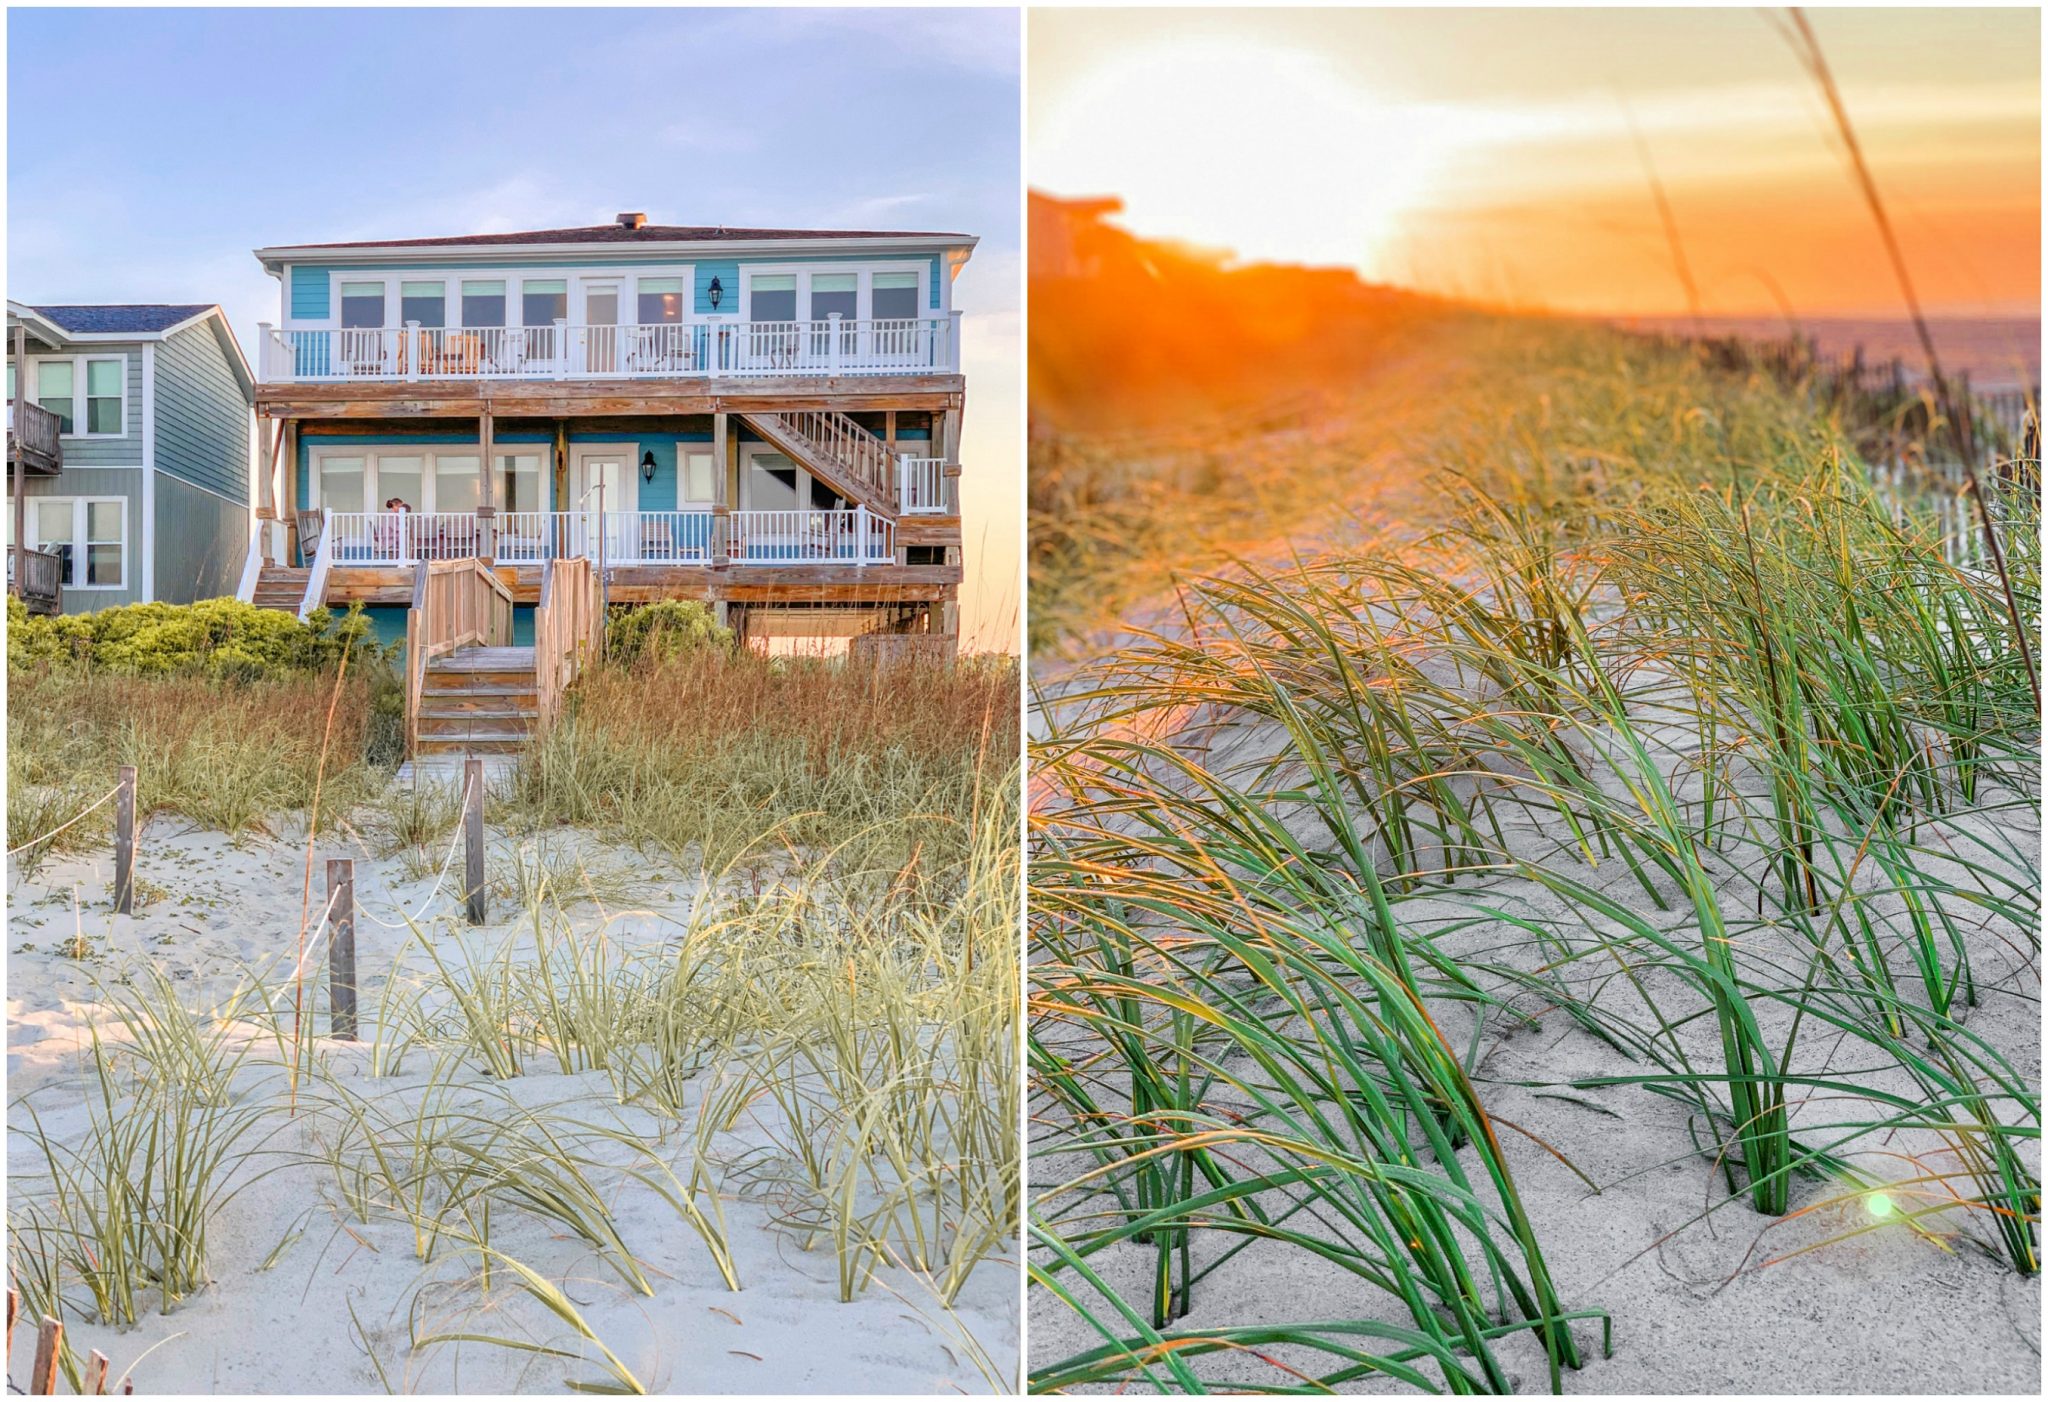 The Brunswick islands North Carolina travel guide what to do sunset beach house holden beach ocean isle oak island sunset sunrise rental visit vacation beach